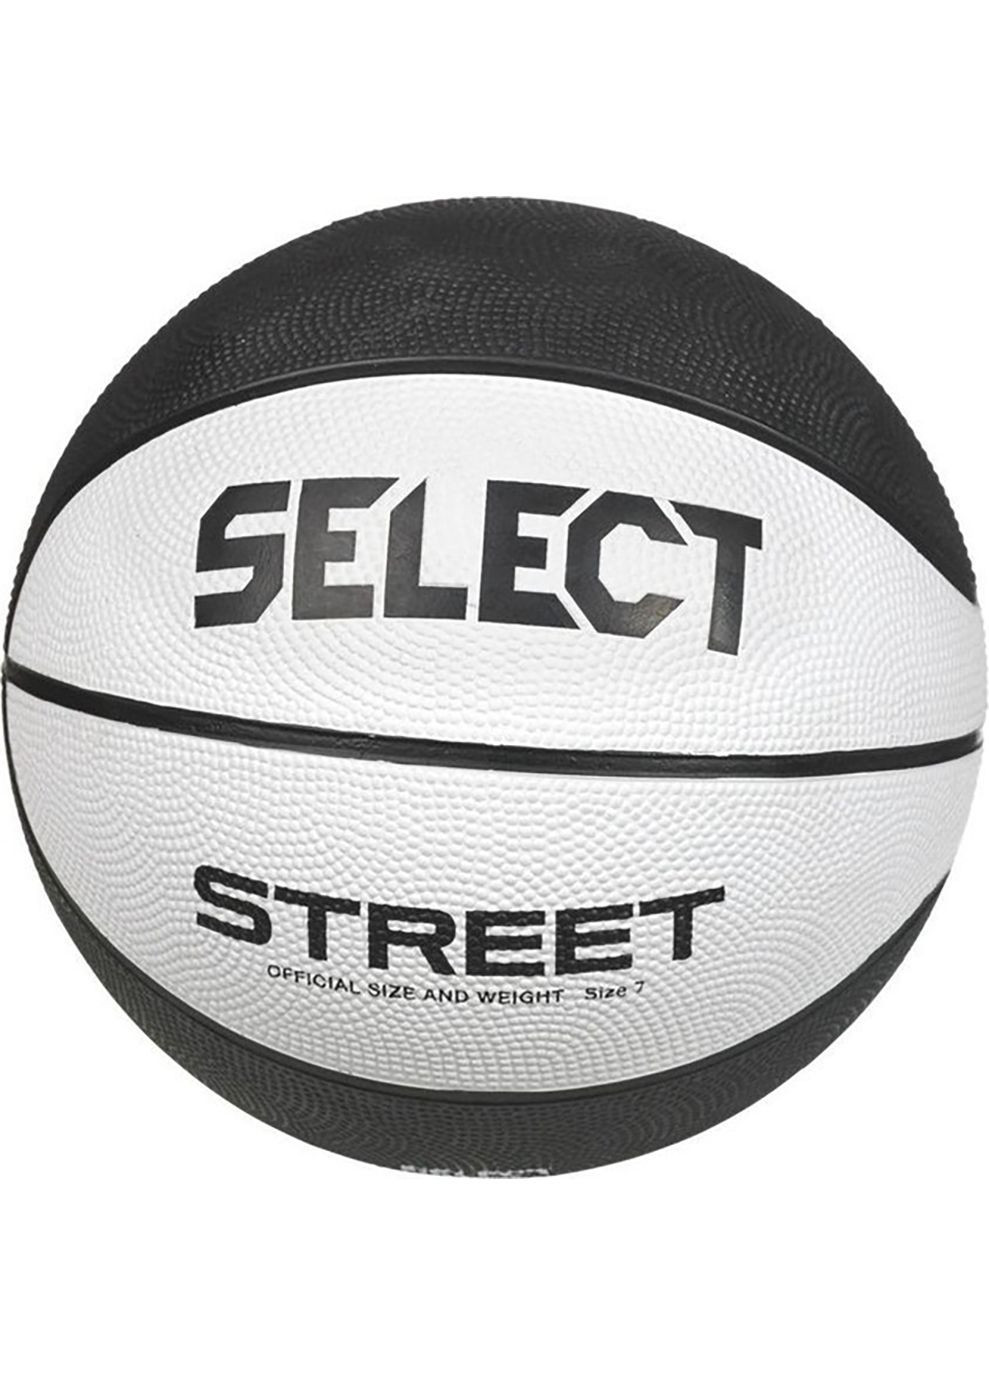 Баскетбольный Мяч BASKETBALL STREET v23 бело-черный Уни 6 Select (282617040)